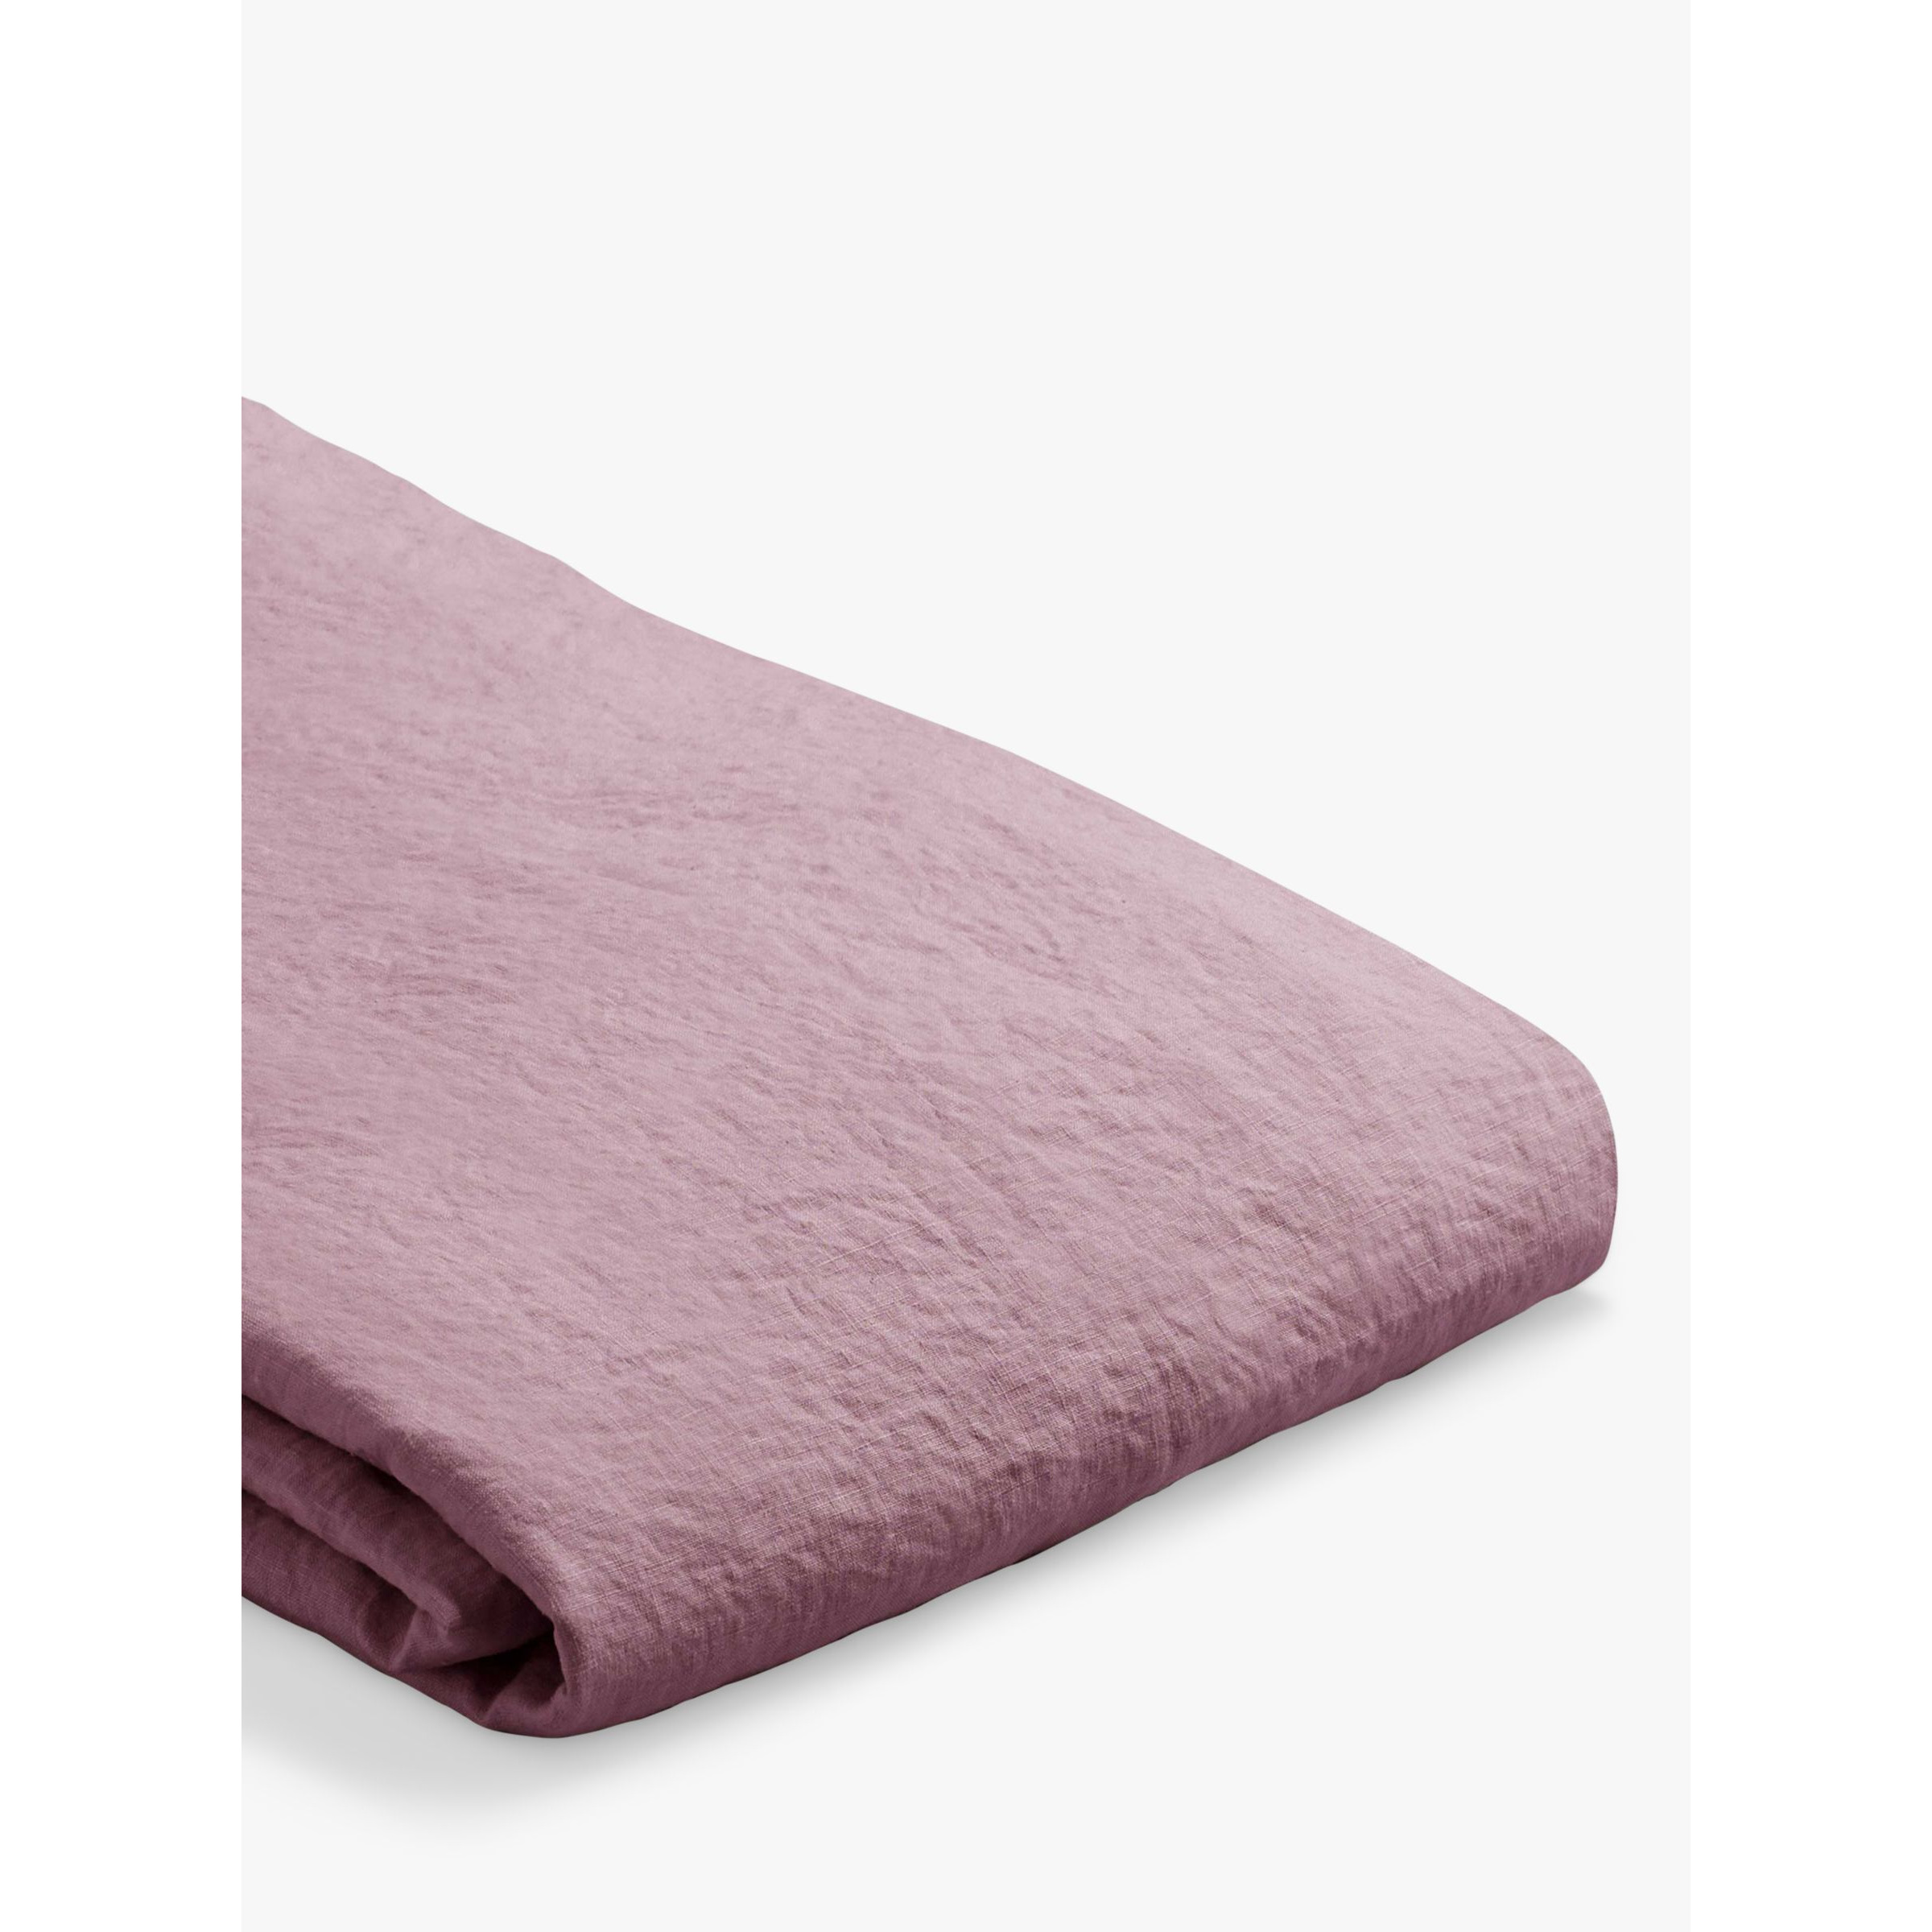 Piglet in Bed Linen Flat Sheet - image 1